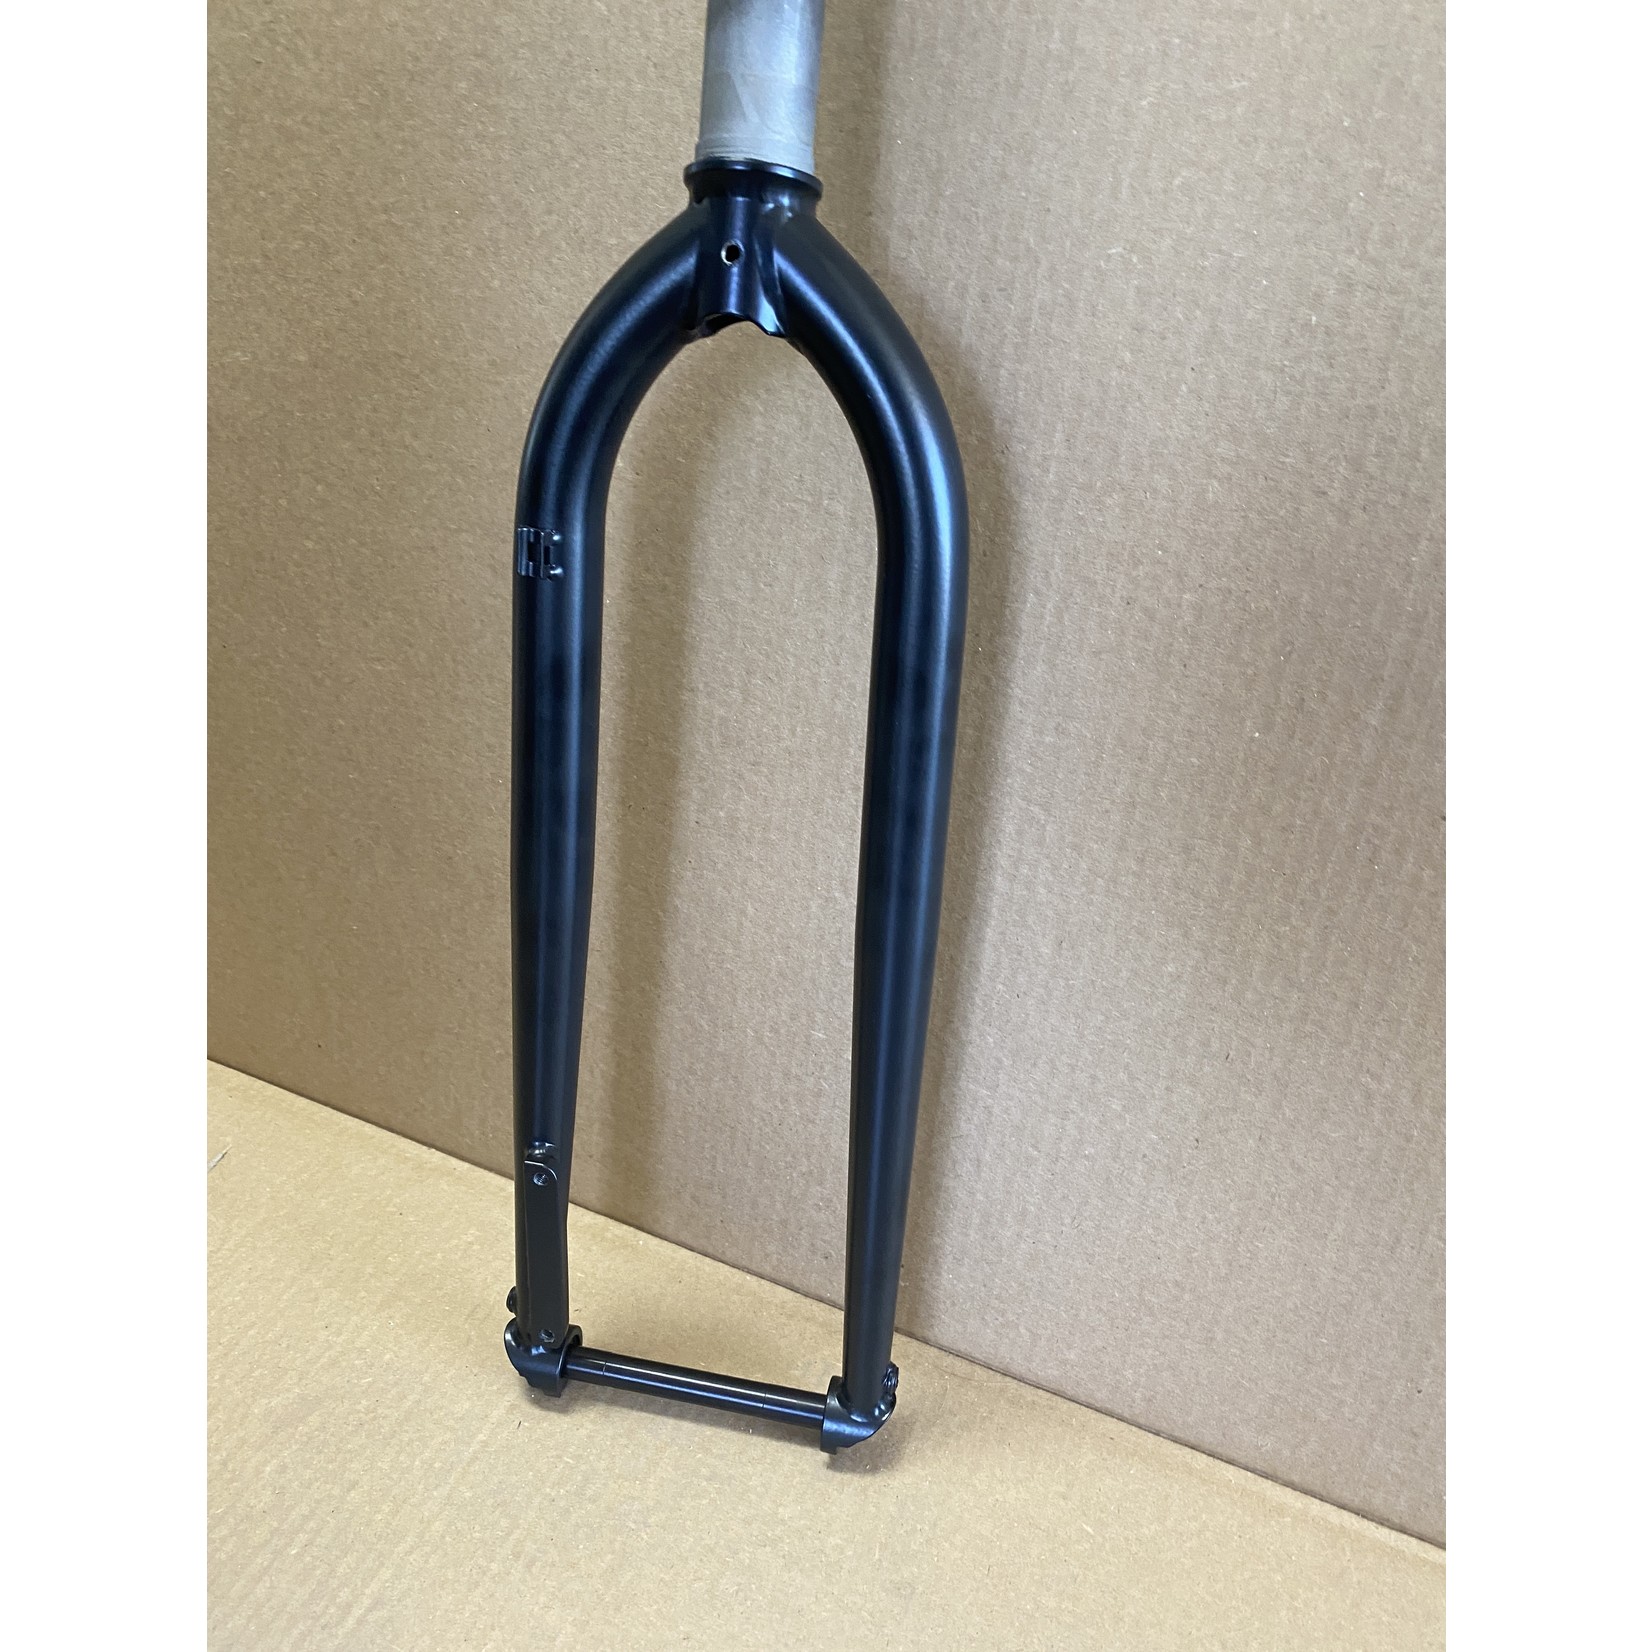 Zinn Cycles All-Road Disc Steel fork - 400mm steerer - 1 1/8" straight steering tube